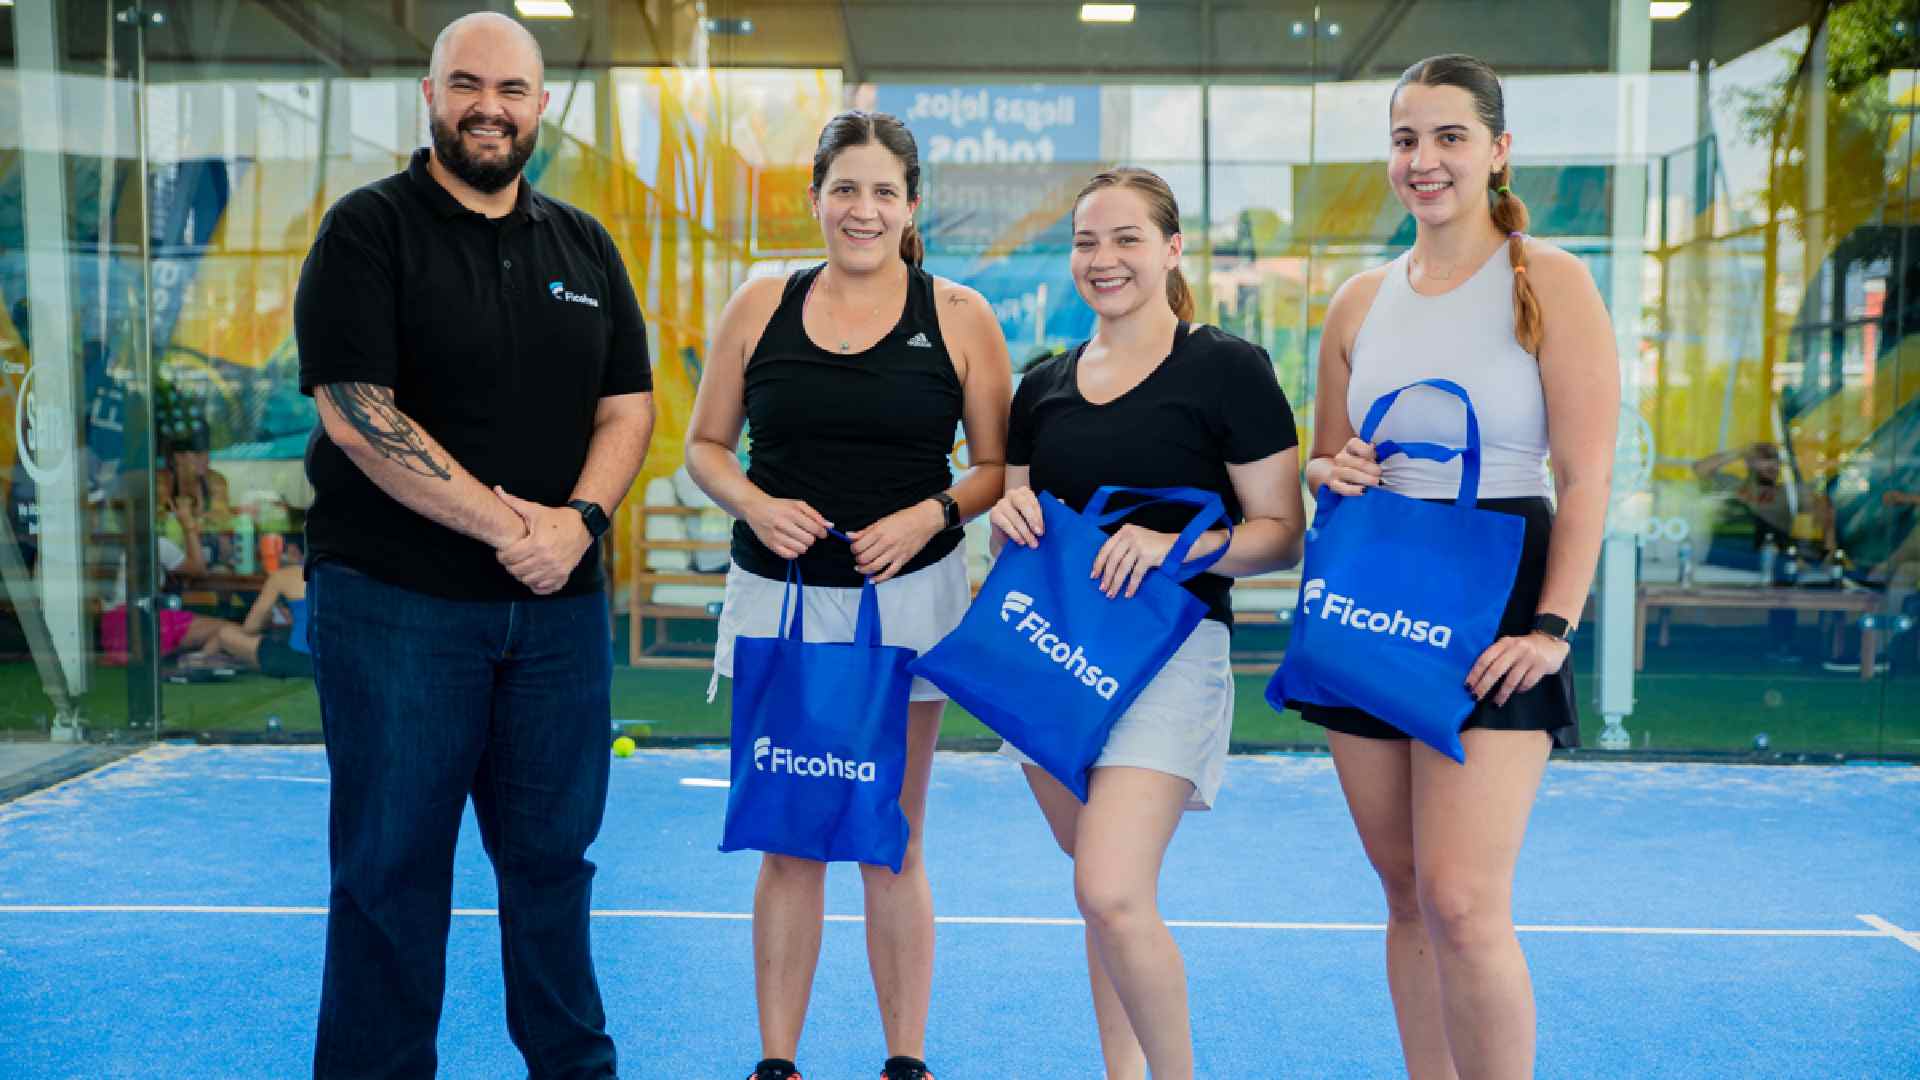 Grupo Ficohsa organiza torneo femenino junto a OG Pádel